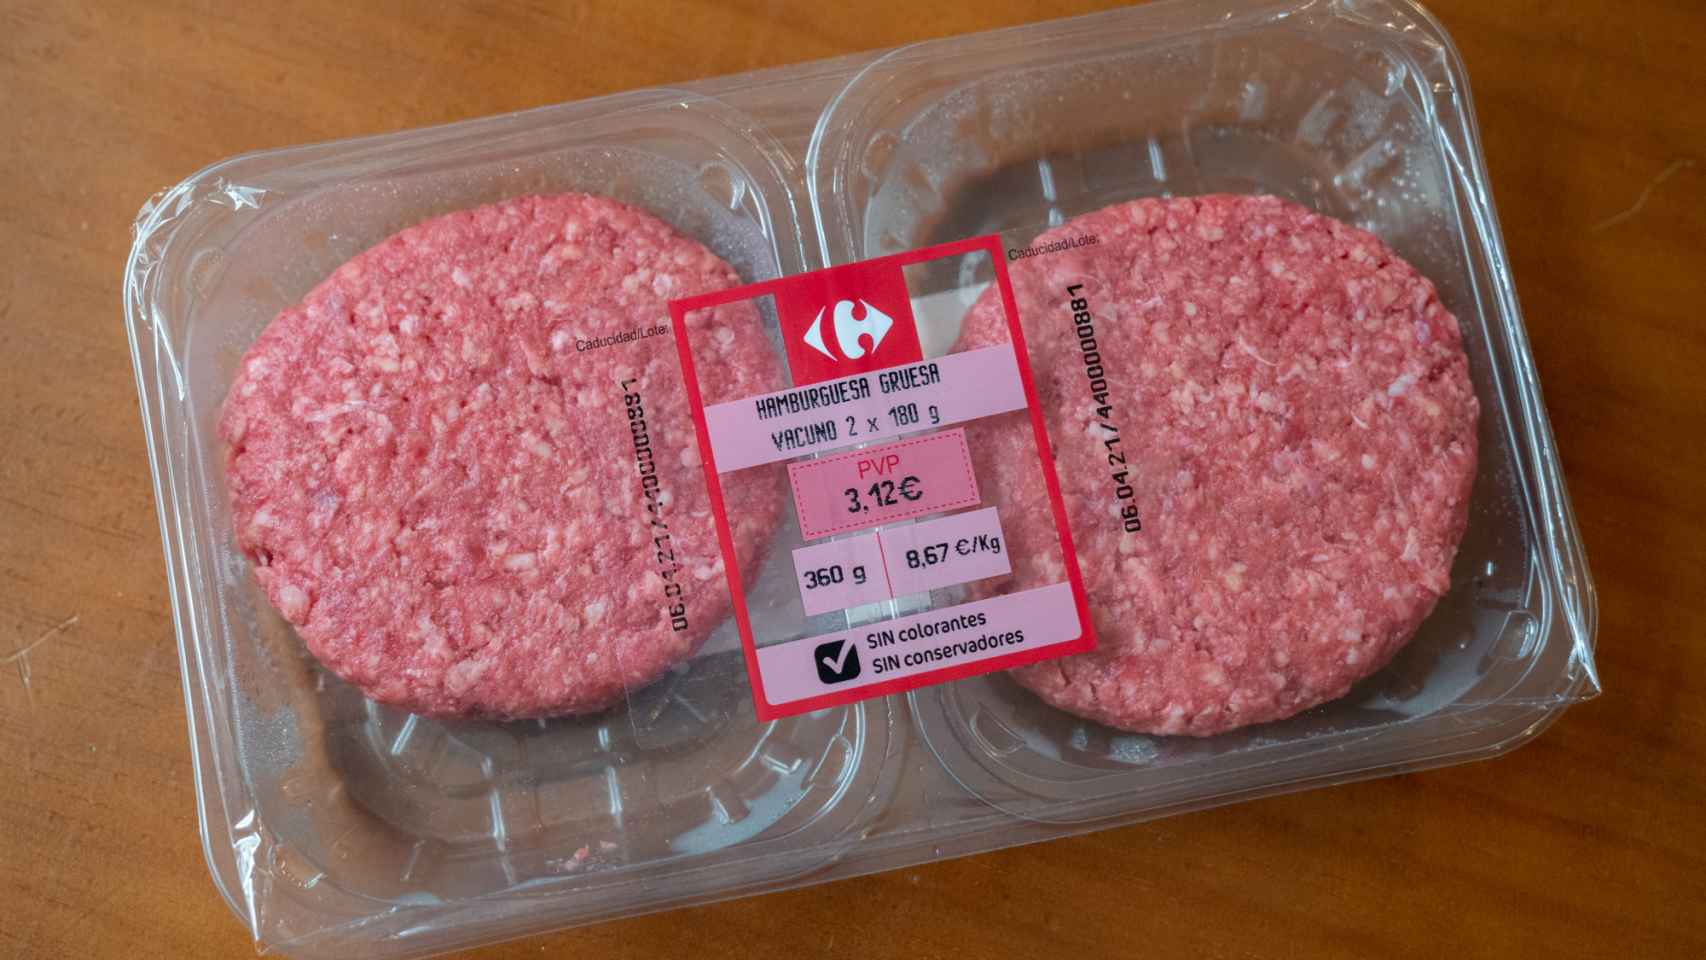 El paquete de hamburguesas de Carrefour.